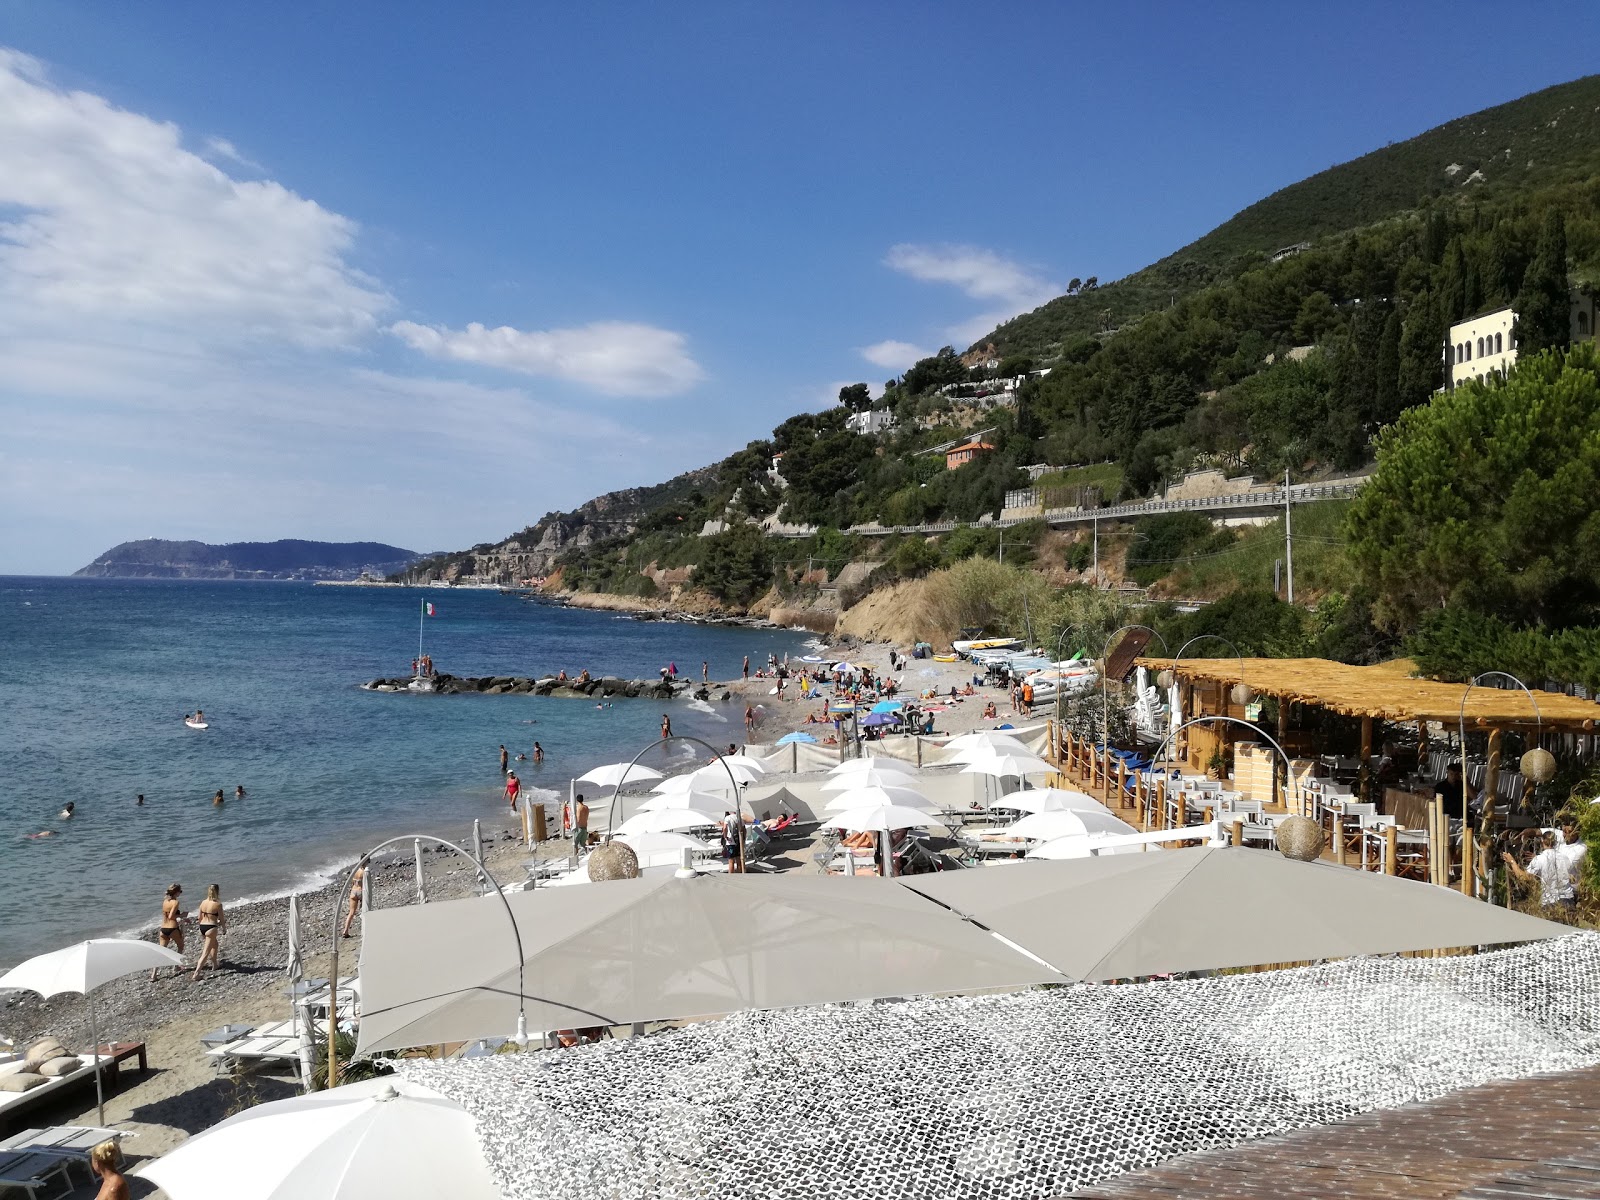 Foto de Spiaggia libera Alassio con parcialmente limpio nivel de limpieza